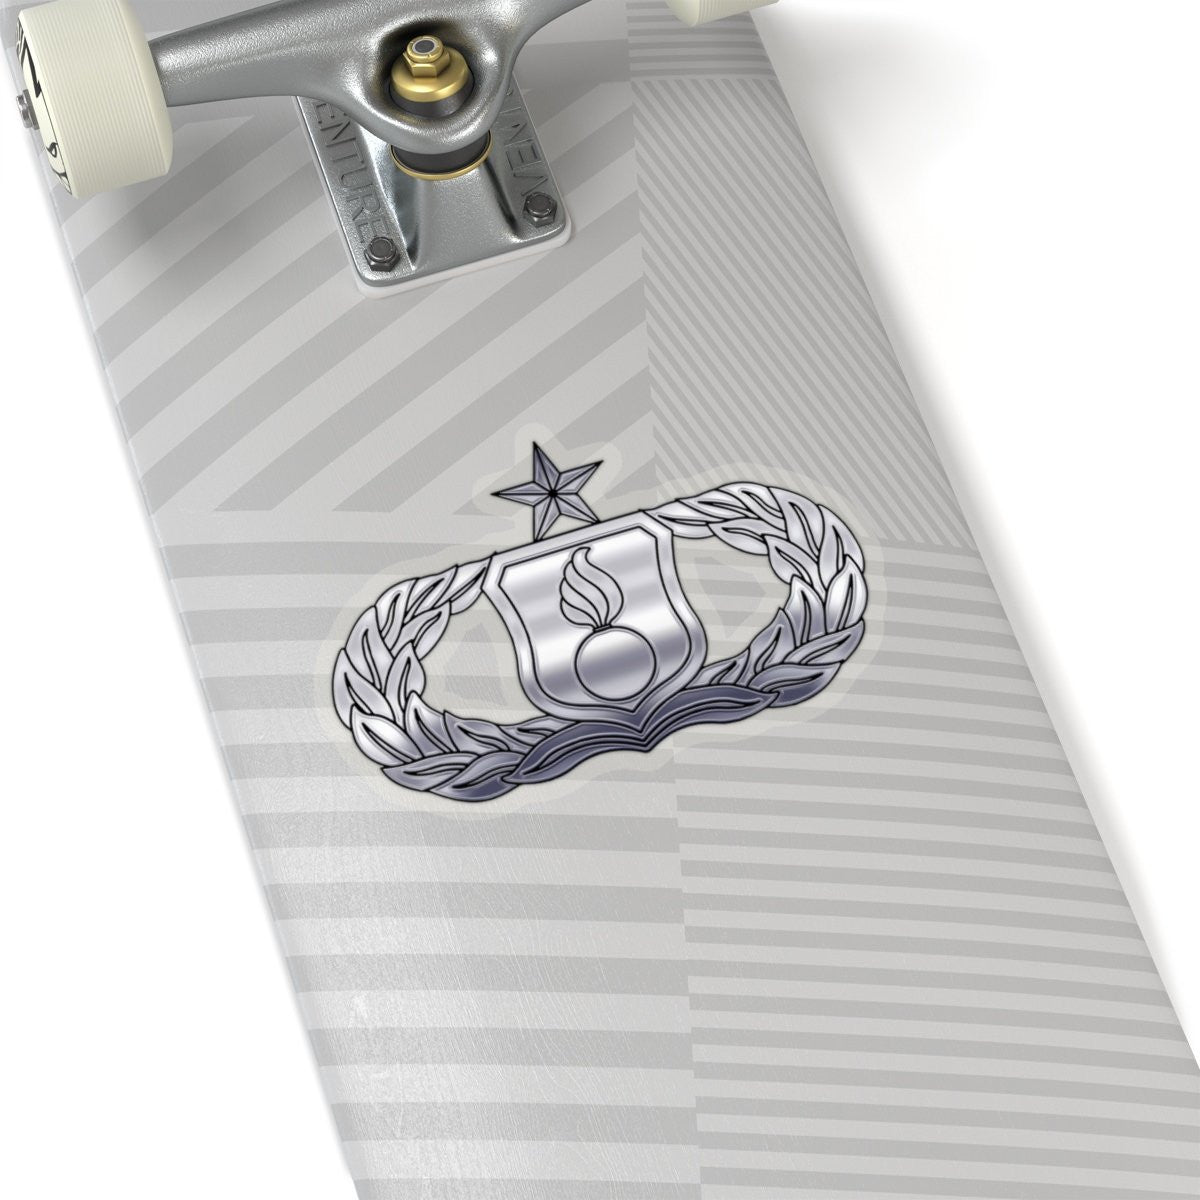 USAF AMMO Senior Occupational Badge With a Star IYAAYAS Gift Kiss-Cut Stickers